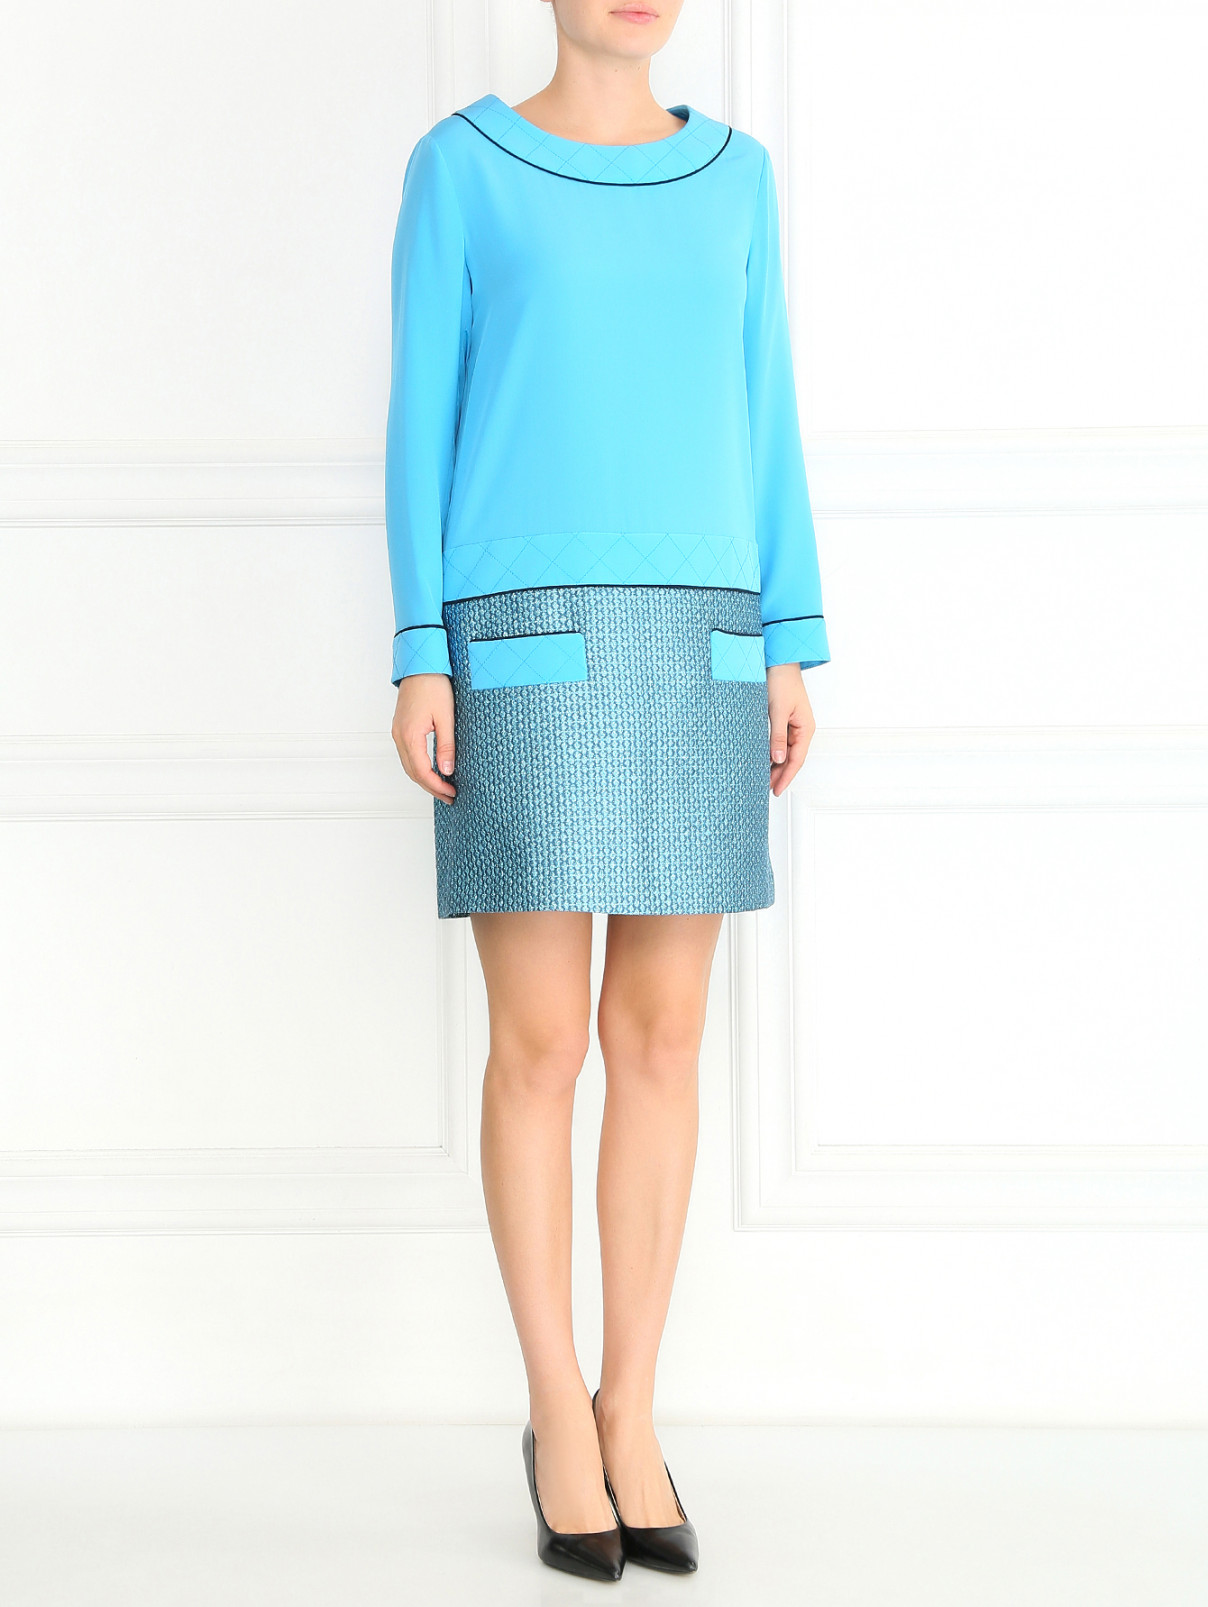 Платье-мини из шелка и шерсти Moschino Couture  –  Модель Общий вид  – Цвет:  Синий